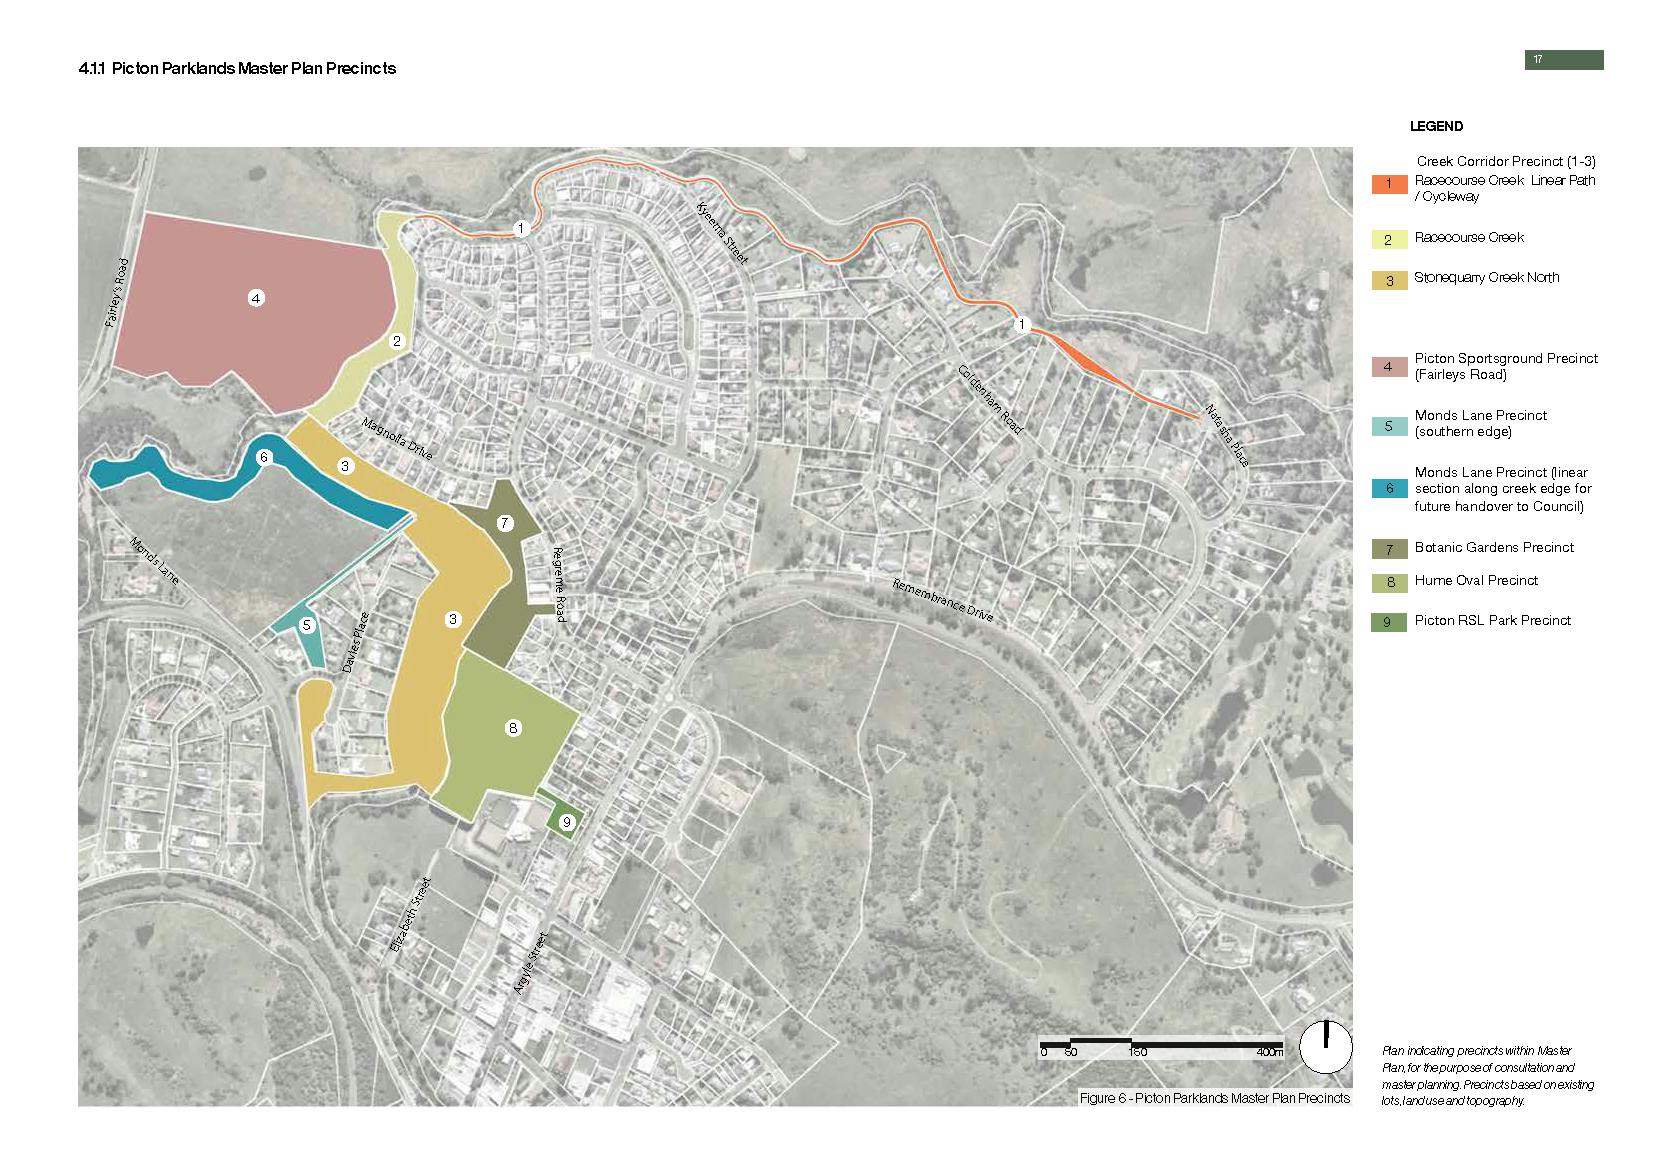 Picton Parklands Master Plan Precincts